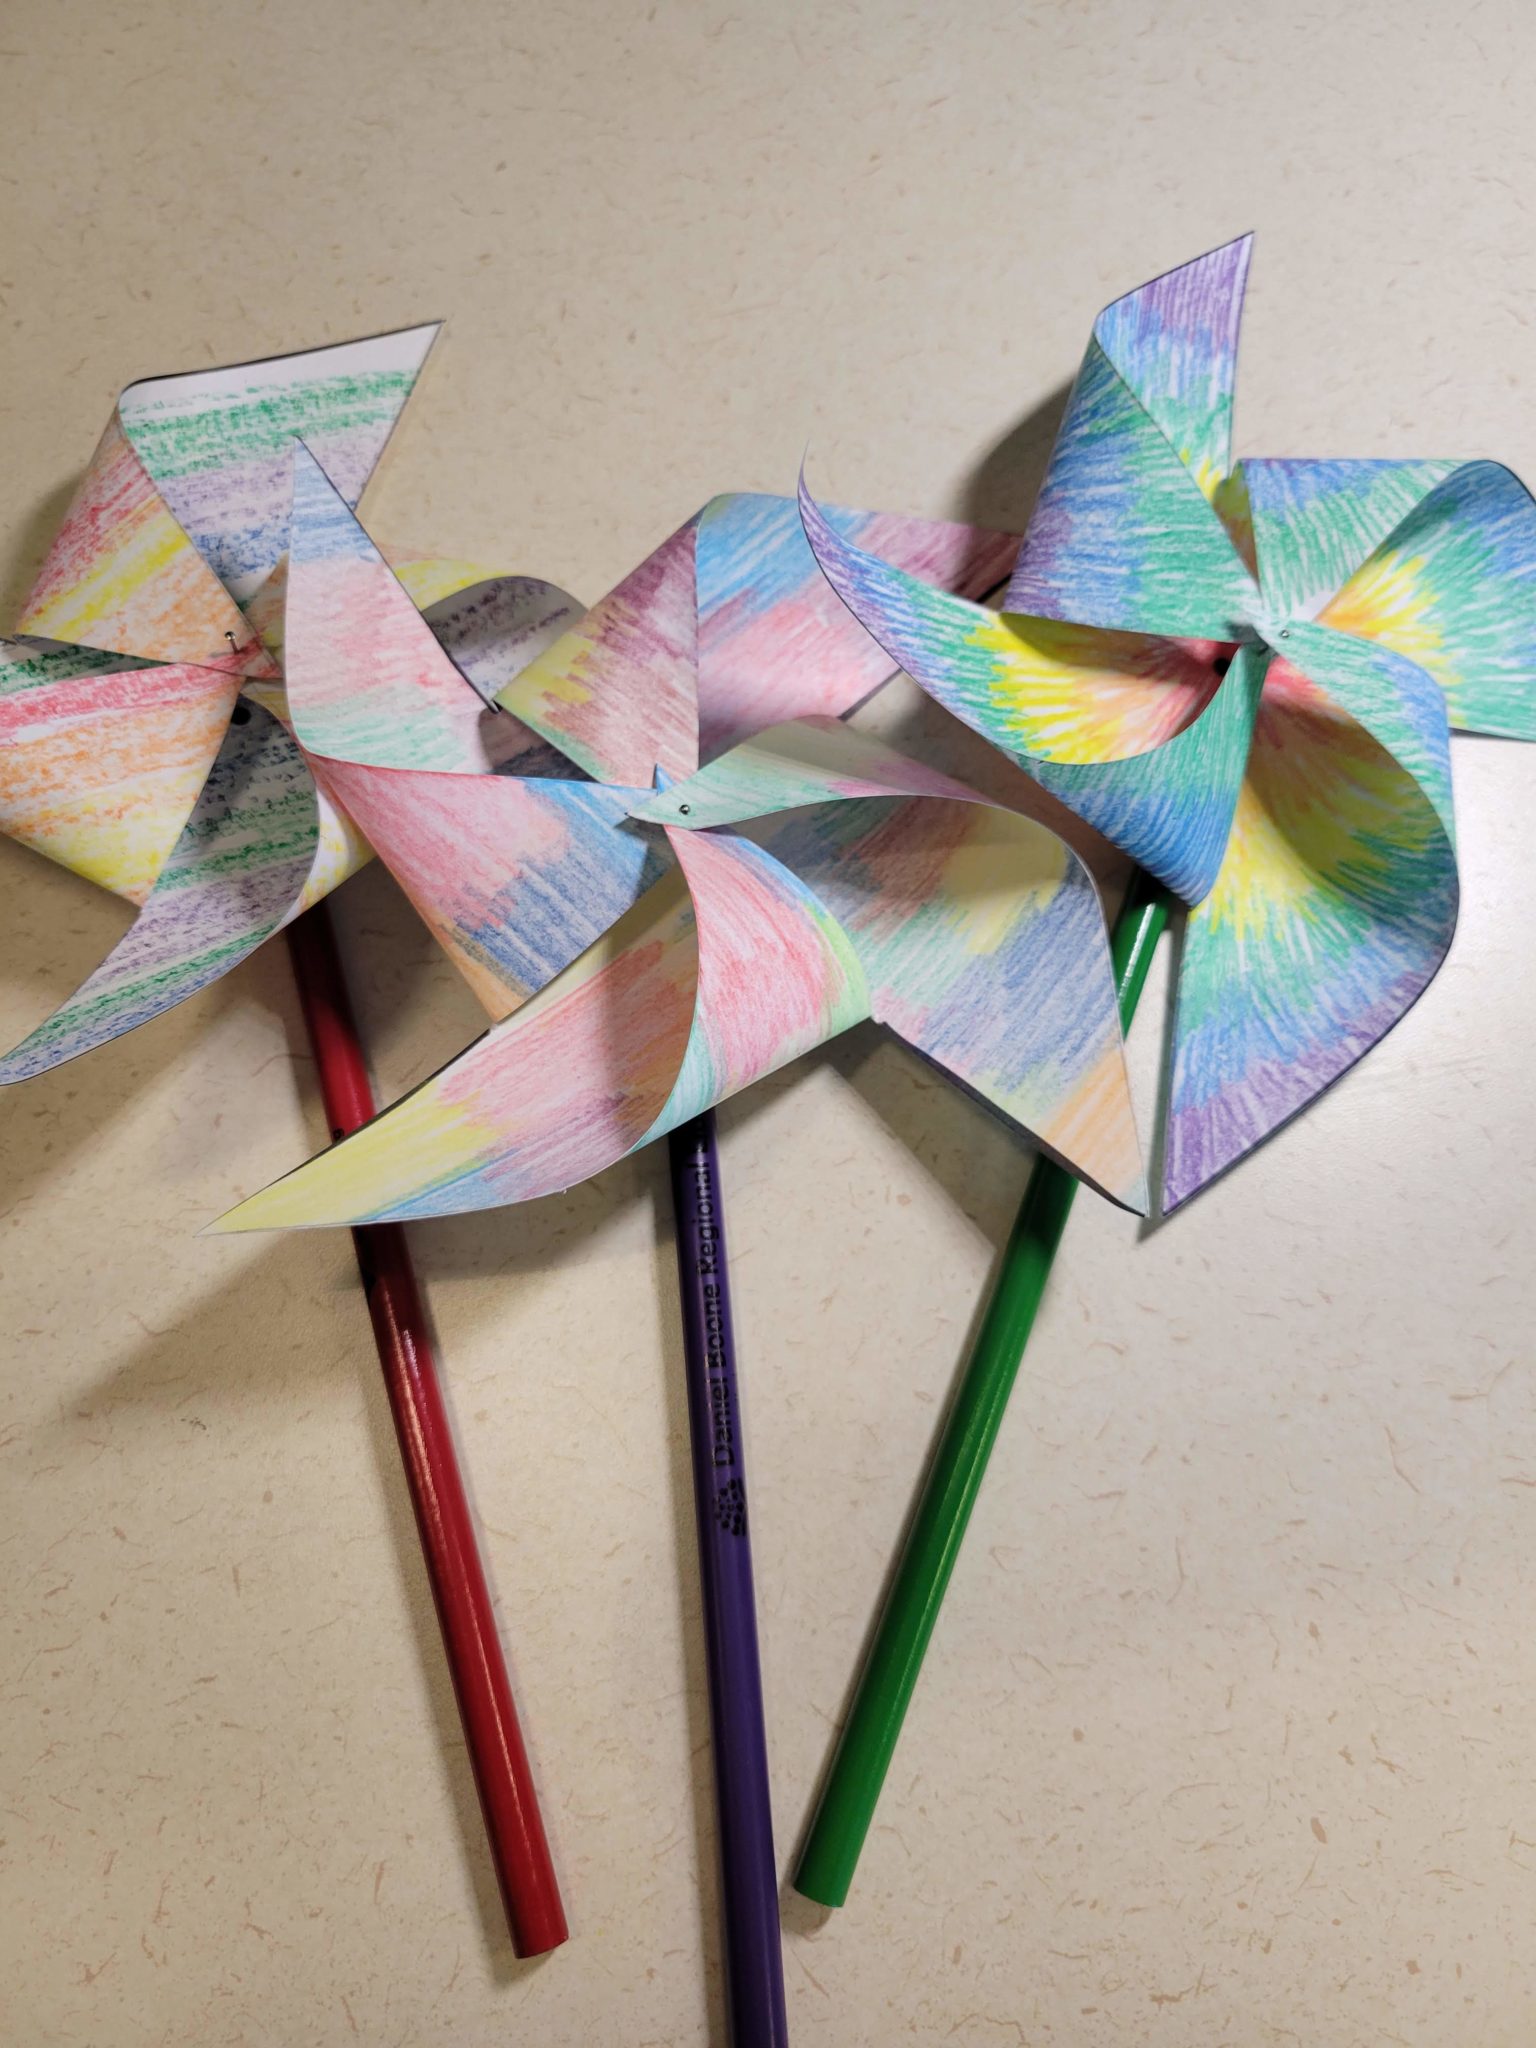 Three completed pinwheel flowers